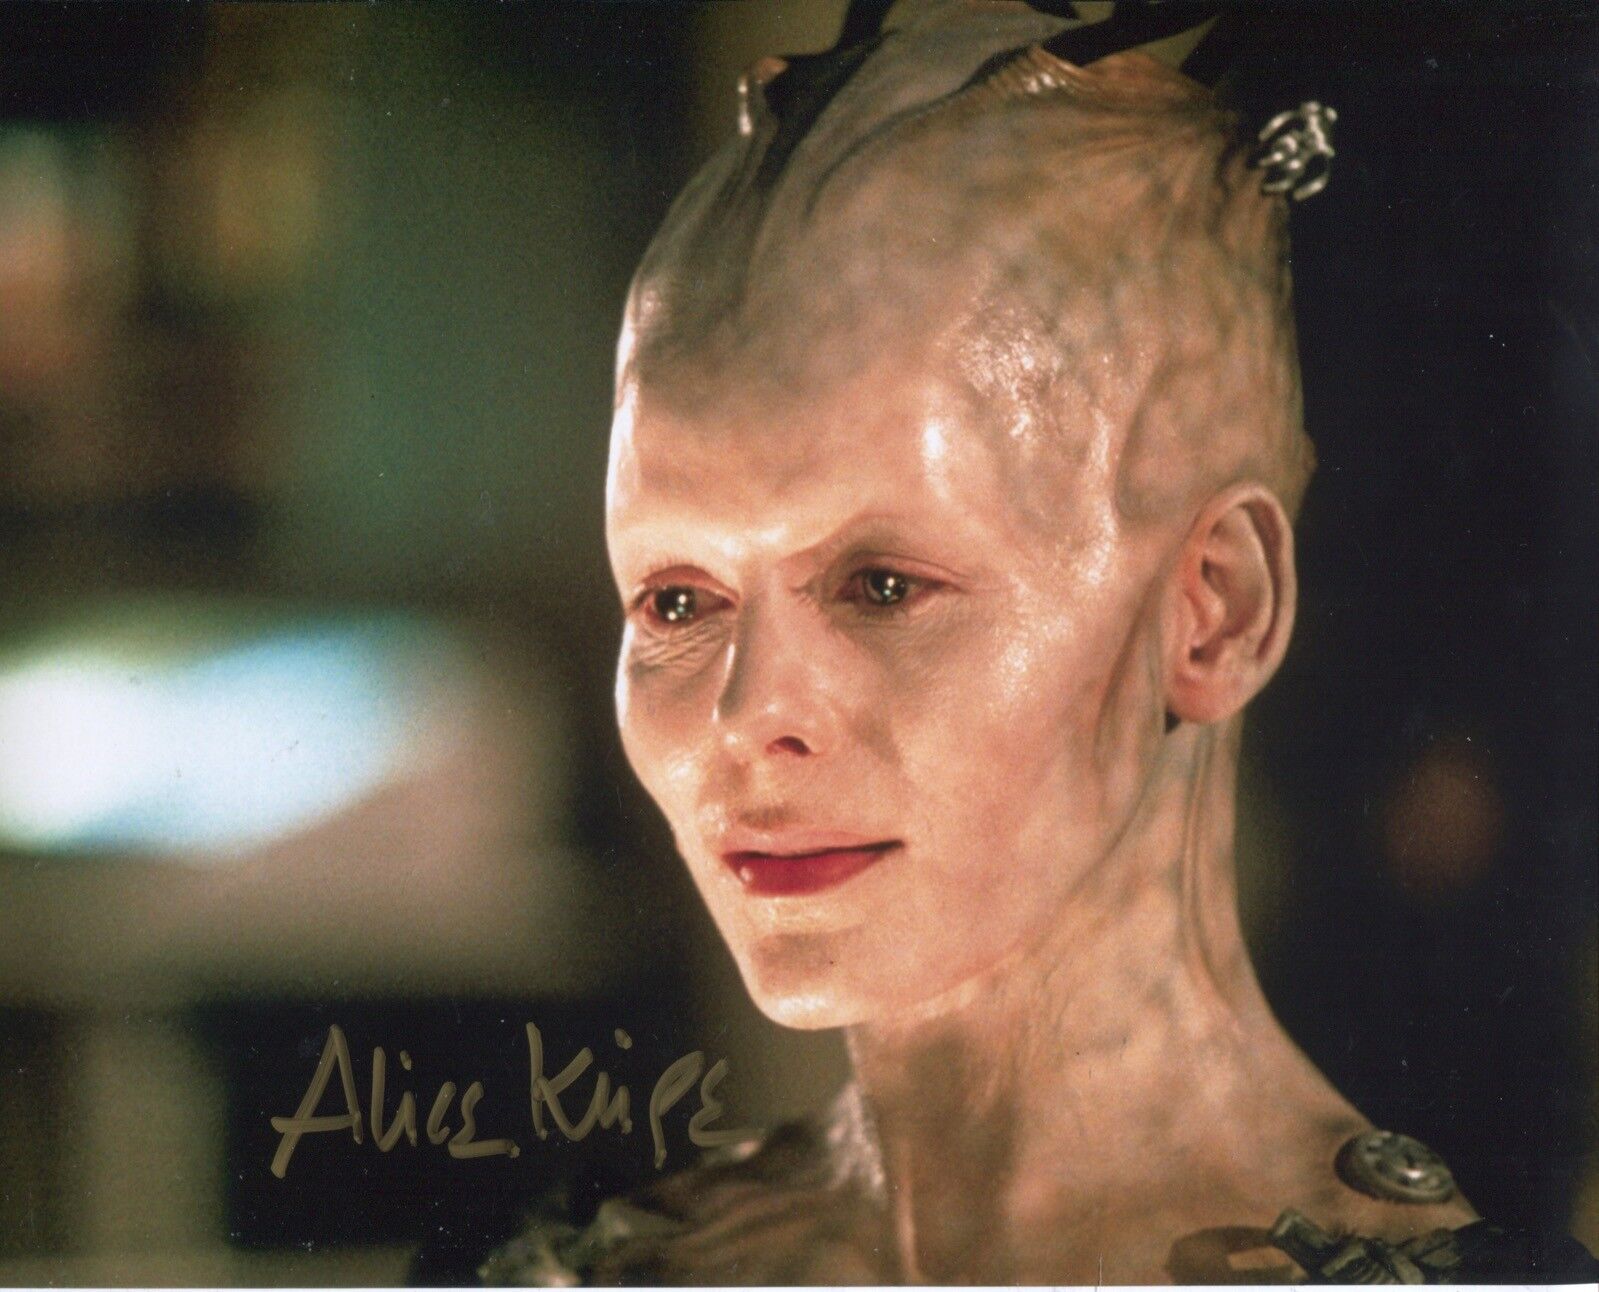 Star Trek Borg Queen actress Alice Krige signed 8x10 Photo Poster painting - UACC DEALER